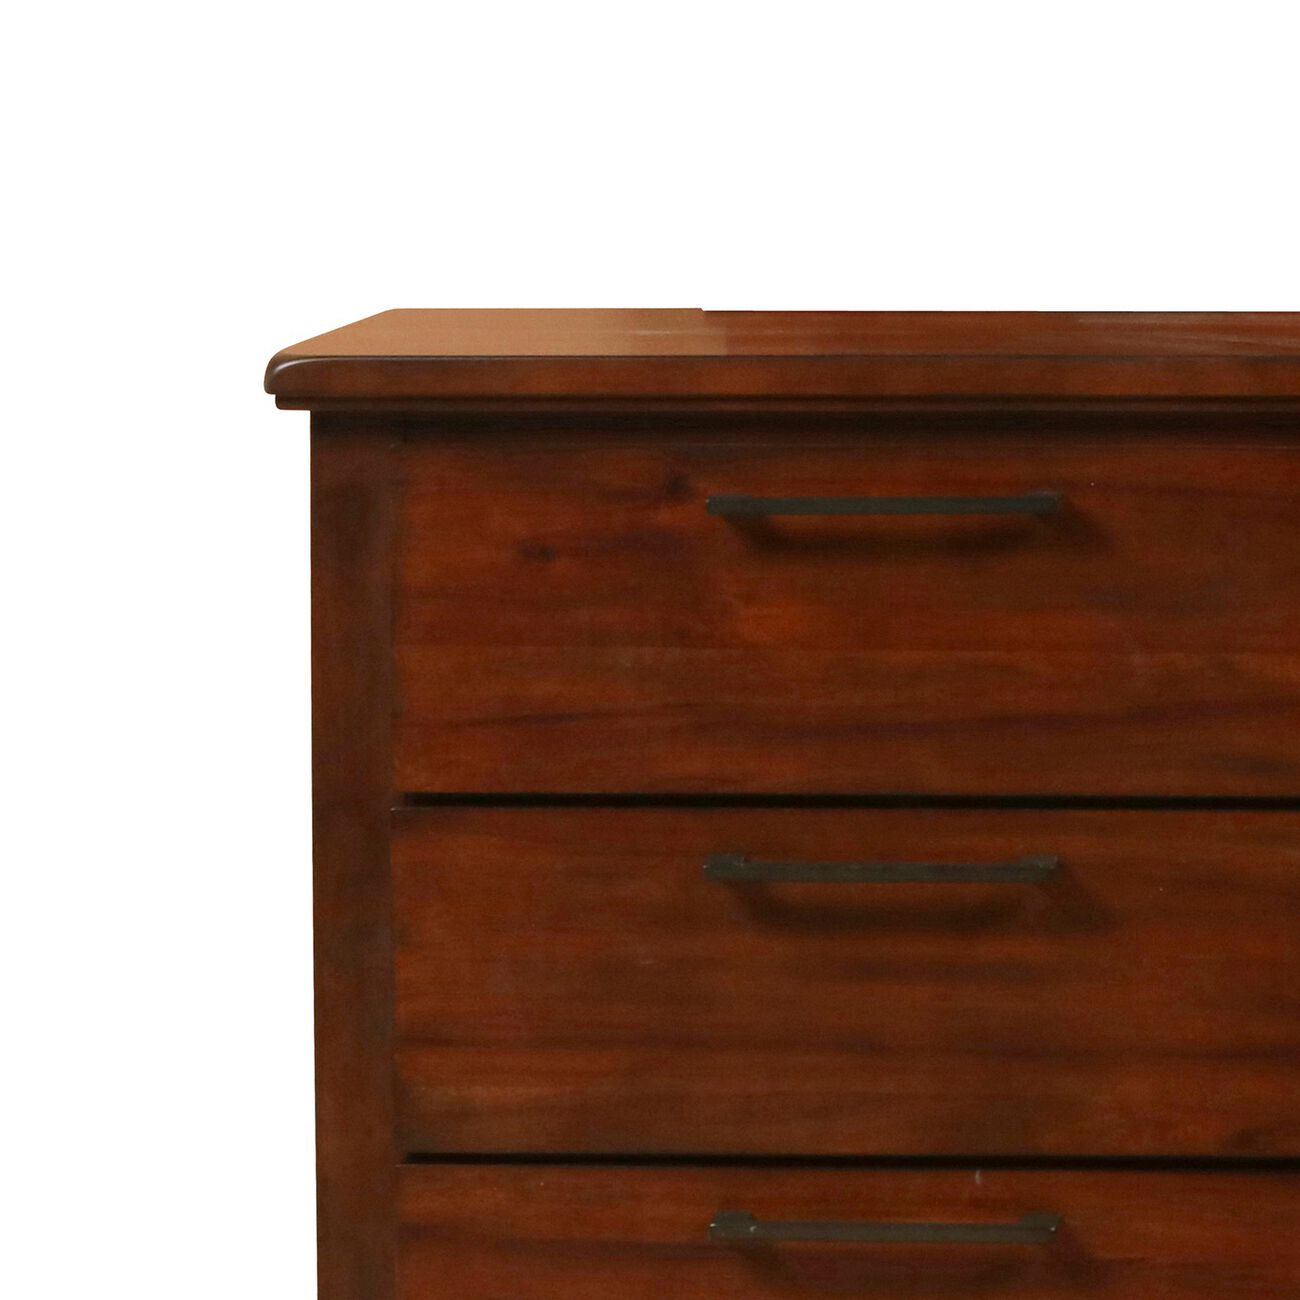 6 Drawer Wooden Dresser with Metal Bar Pulls, Chestnut Brown